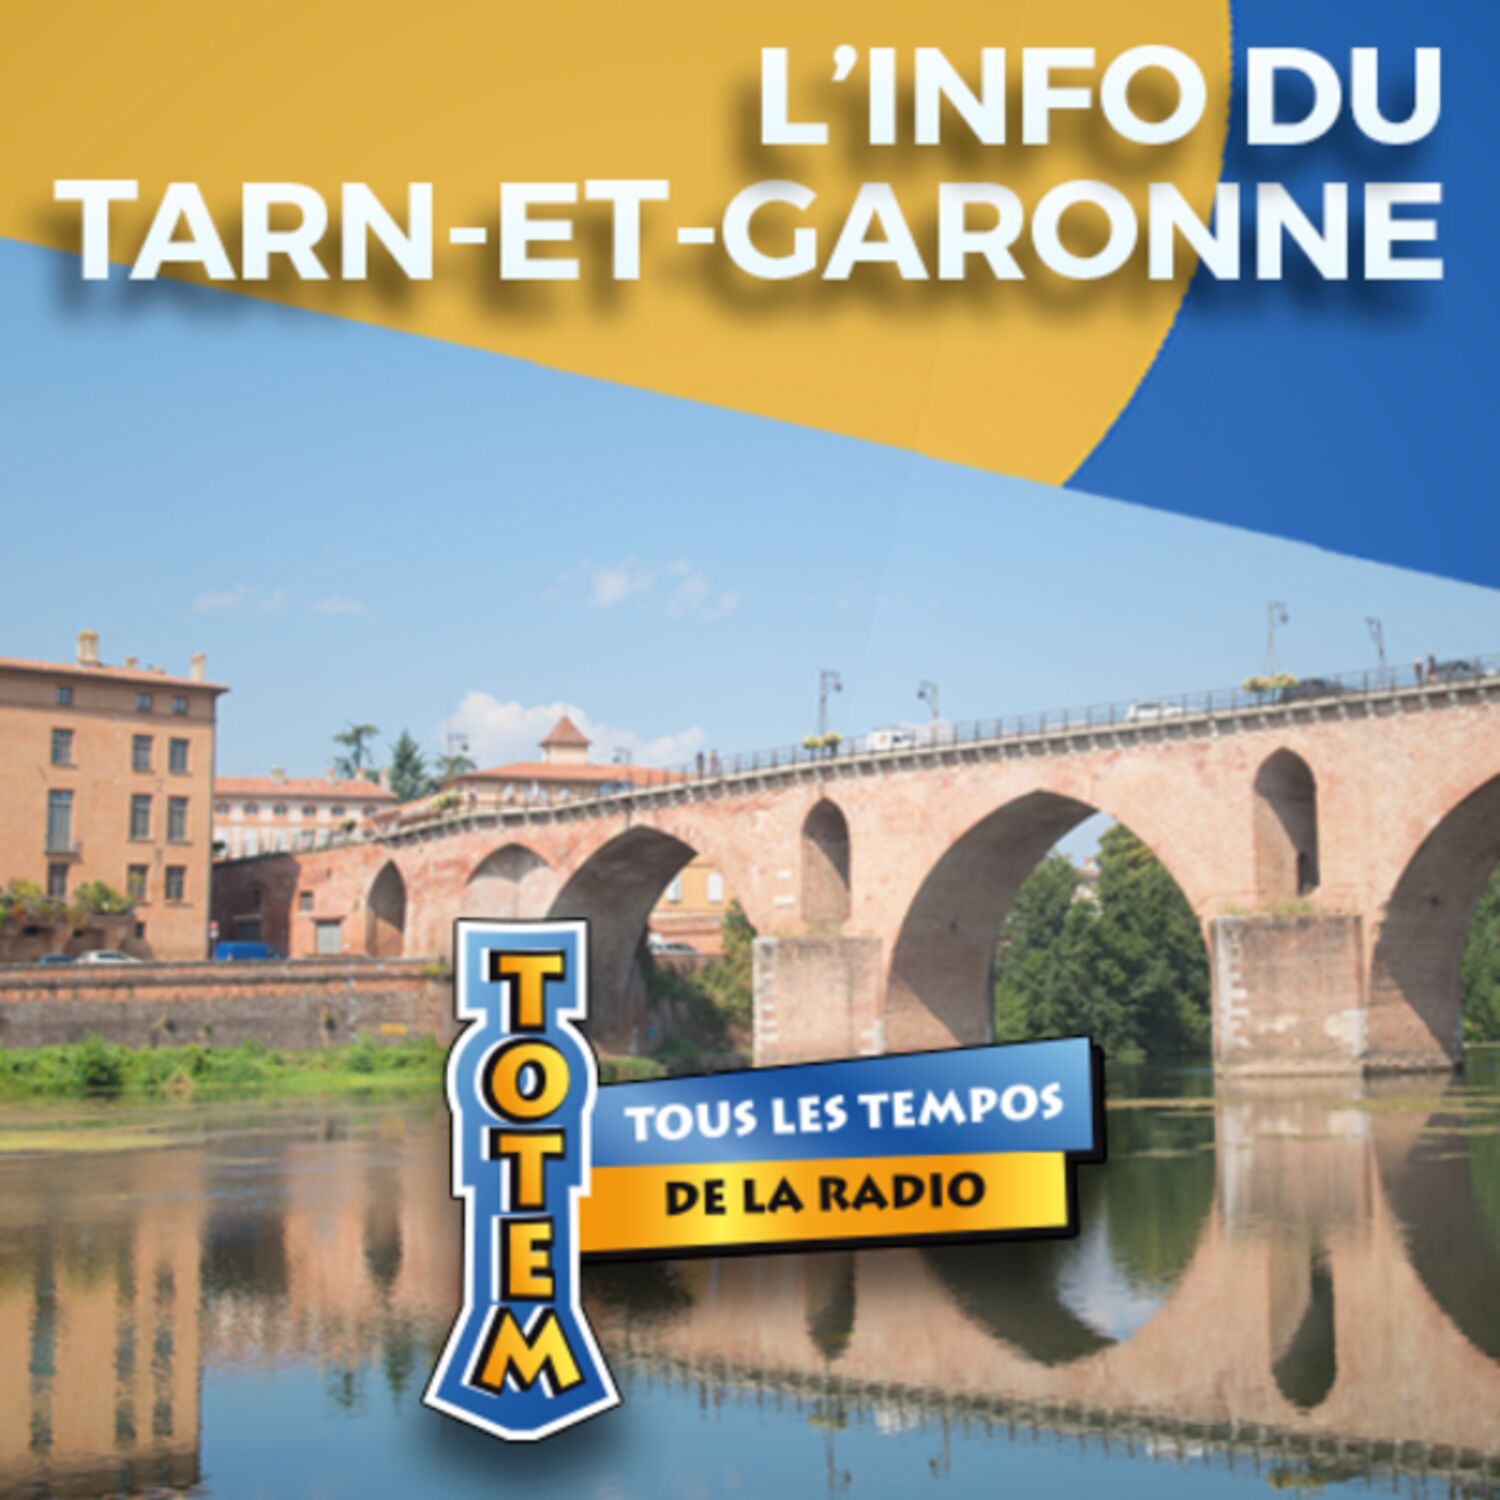 L'info du Tarn-et-Garonne du 05/05/23 à 11h59